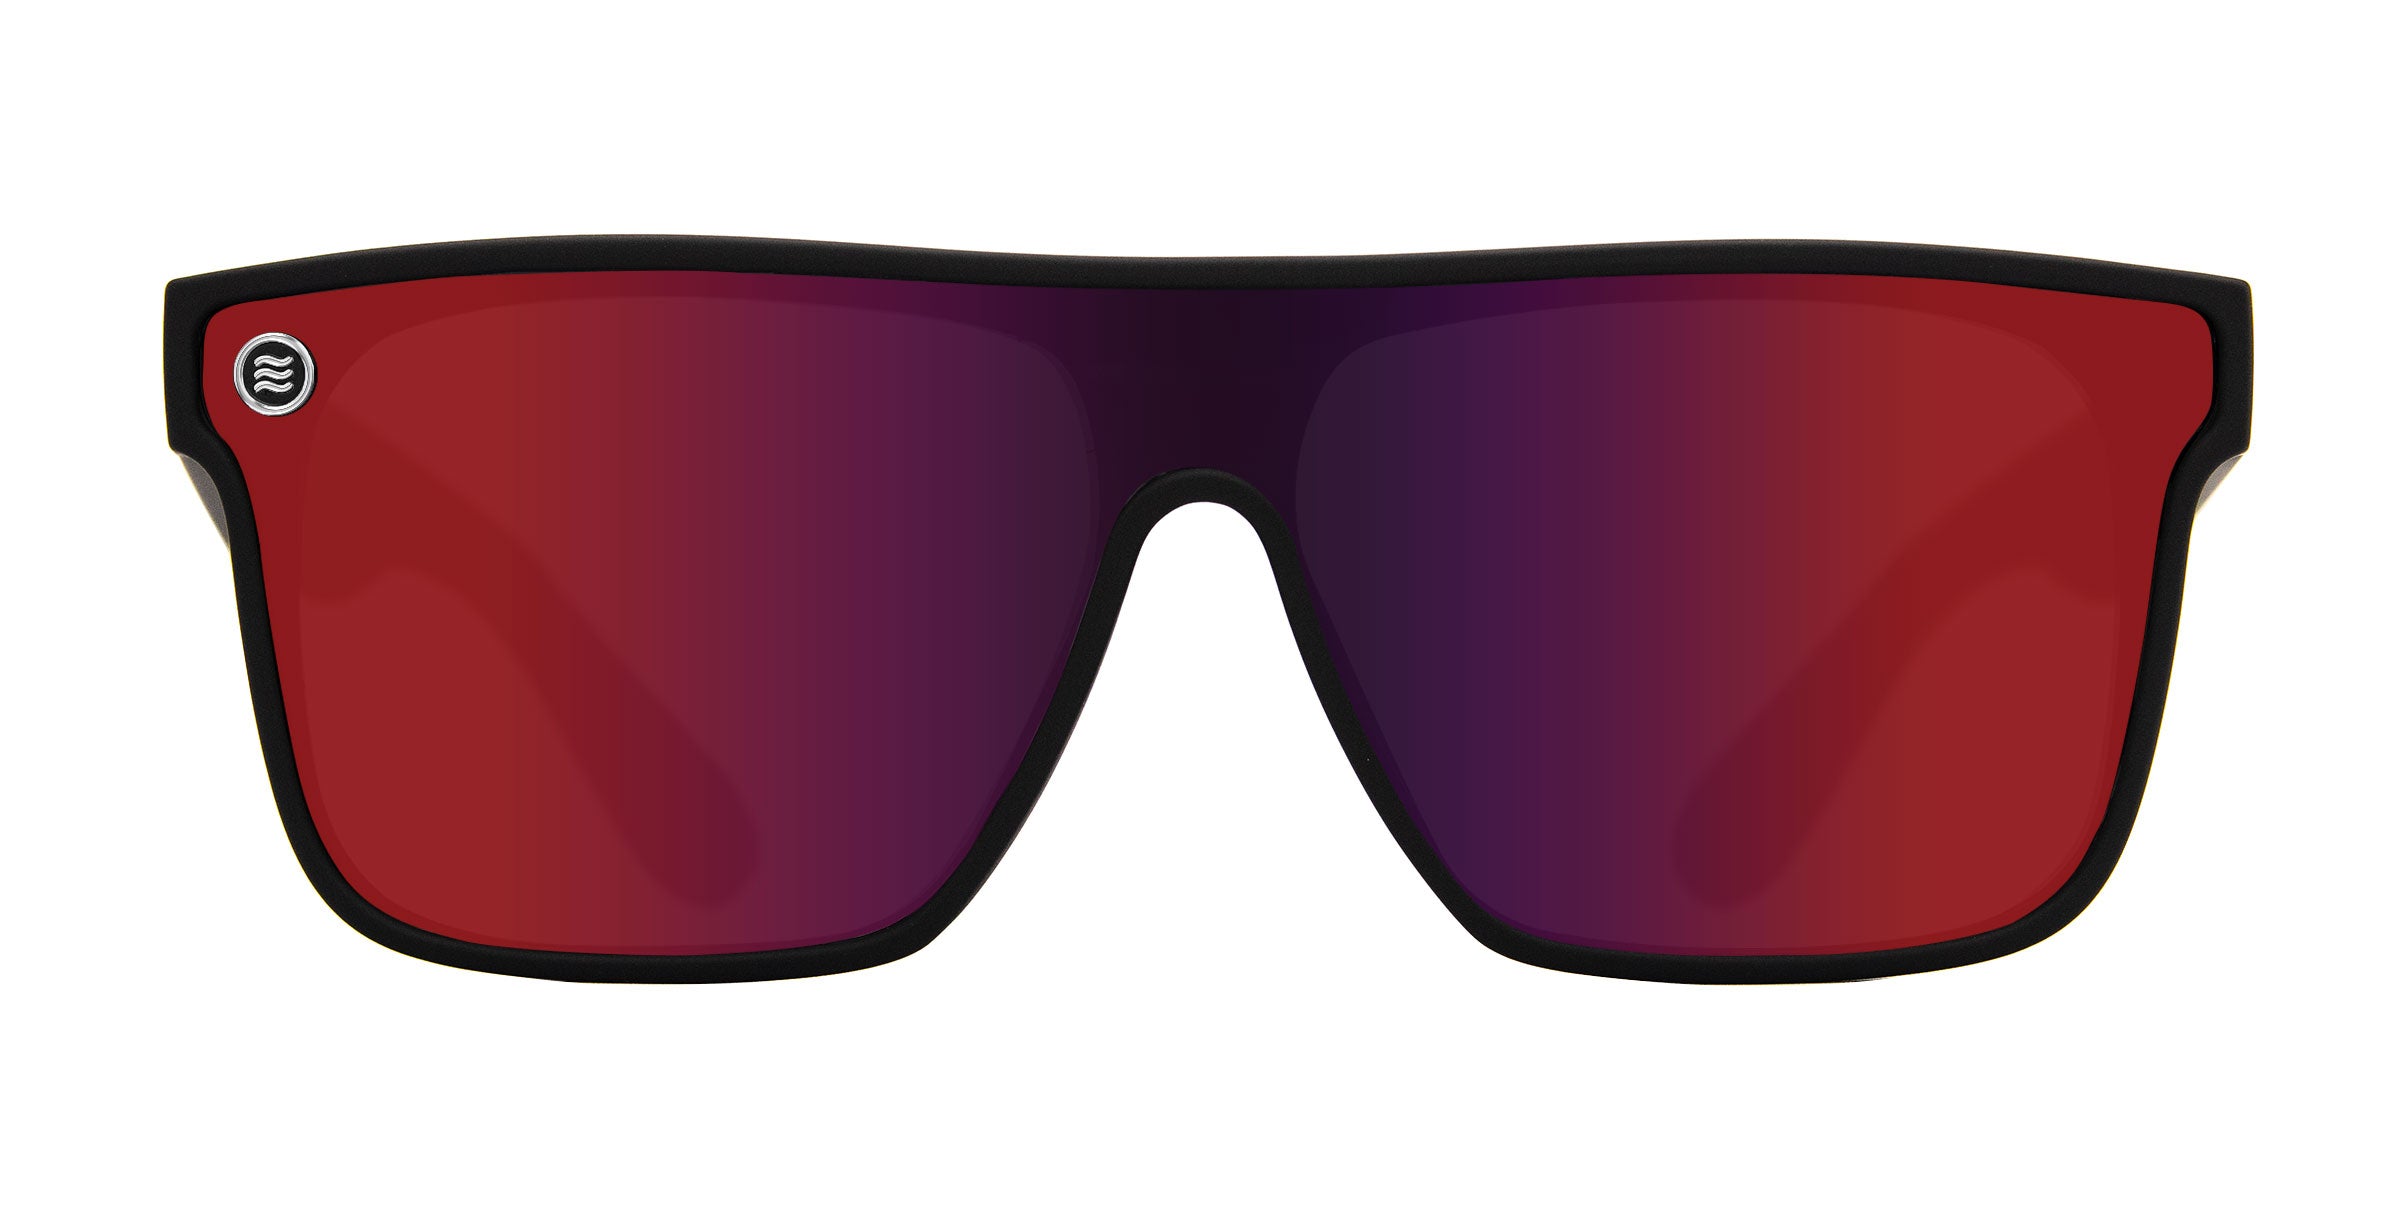 Neven Eyewear®  Polarized, On-Trend, Affordable Sunglasses